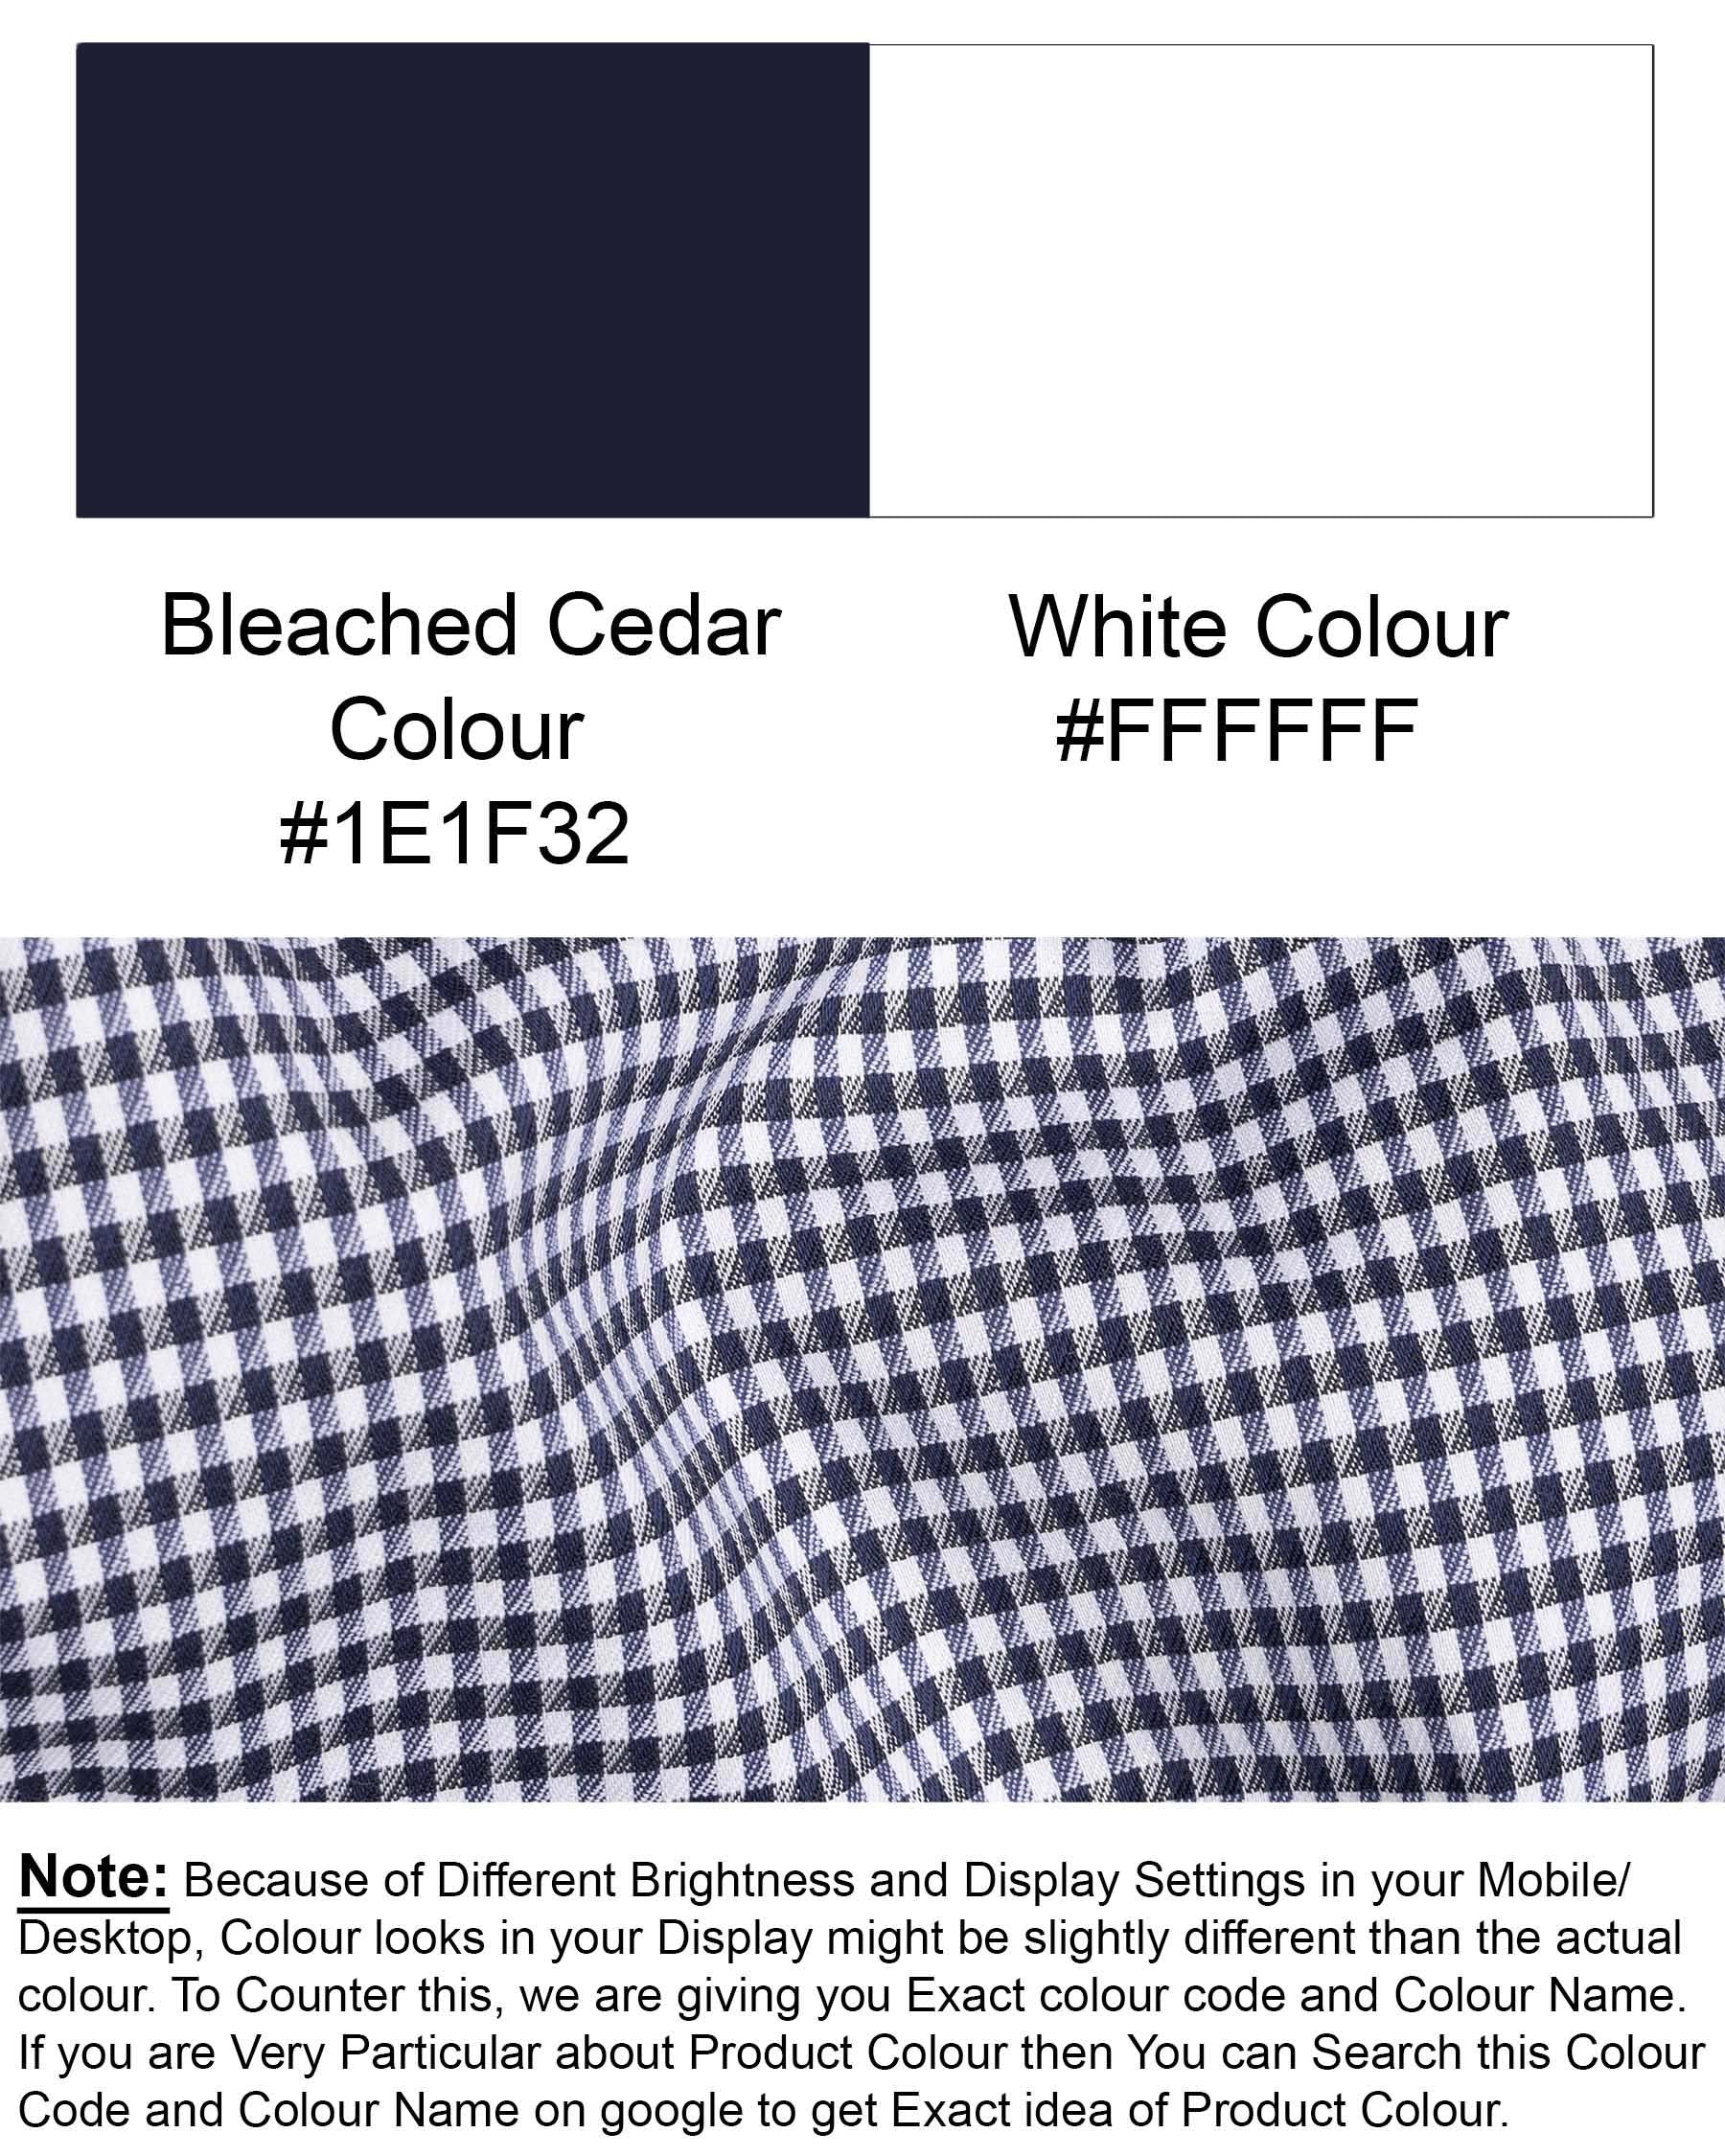 Bleached Cedar Checkered Dobby Textured Premium Giza Cotton Shirt 6931-CA-BLE-38,6931-CA-BLE-38,6931-CA-BLE-39,6931-CA-BLE-39,6931-CA-BLE-40,6931-CA-BLE-40,6931-CA-BLE-42,6931-CA-BLE-42,6931-CA-BLE-44,6931-CA-BLE-44,6931-CA-BLE-46,6931-CA-BLE-46,6931-CA-BLE-48,6931-CA-BLE-48,6931-CA-BLE-50,6931-CA-BLE-50,6931-CA-BLE-52,6931-CA-BLE-52